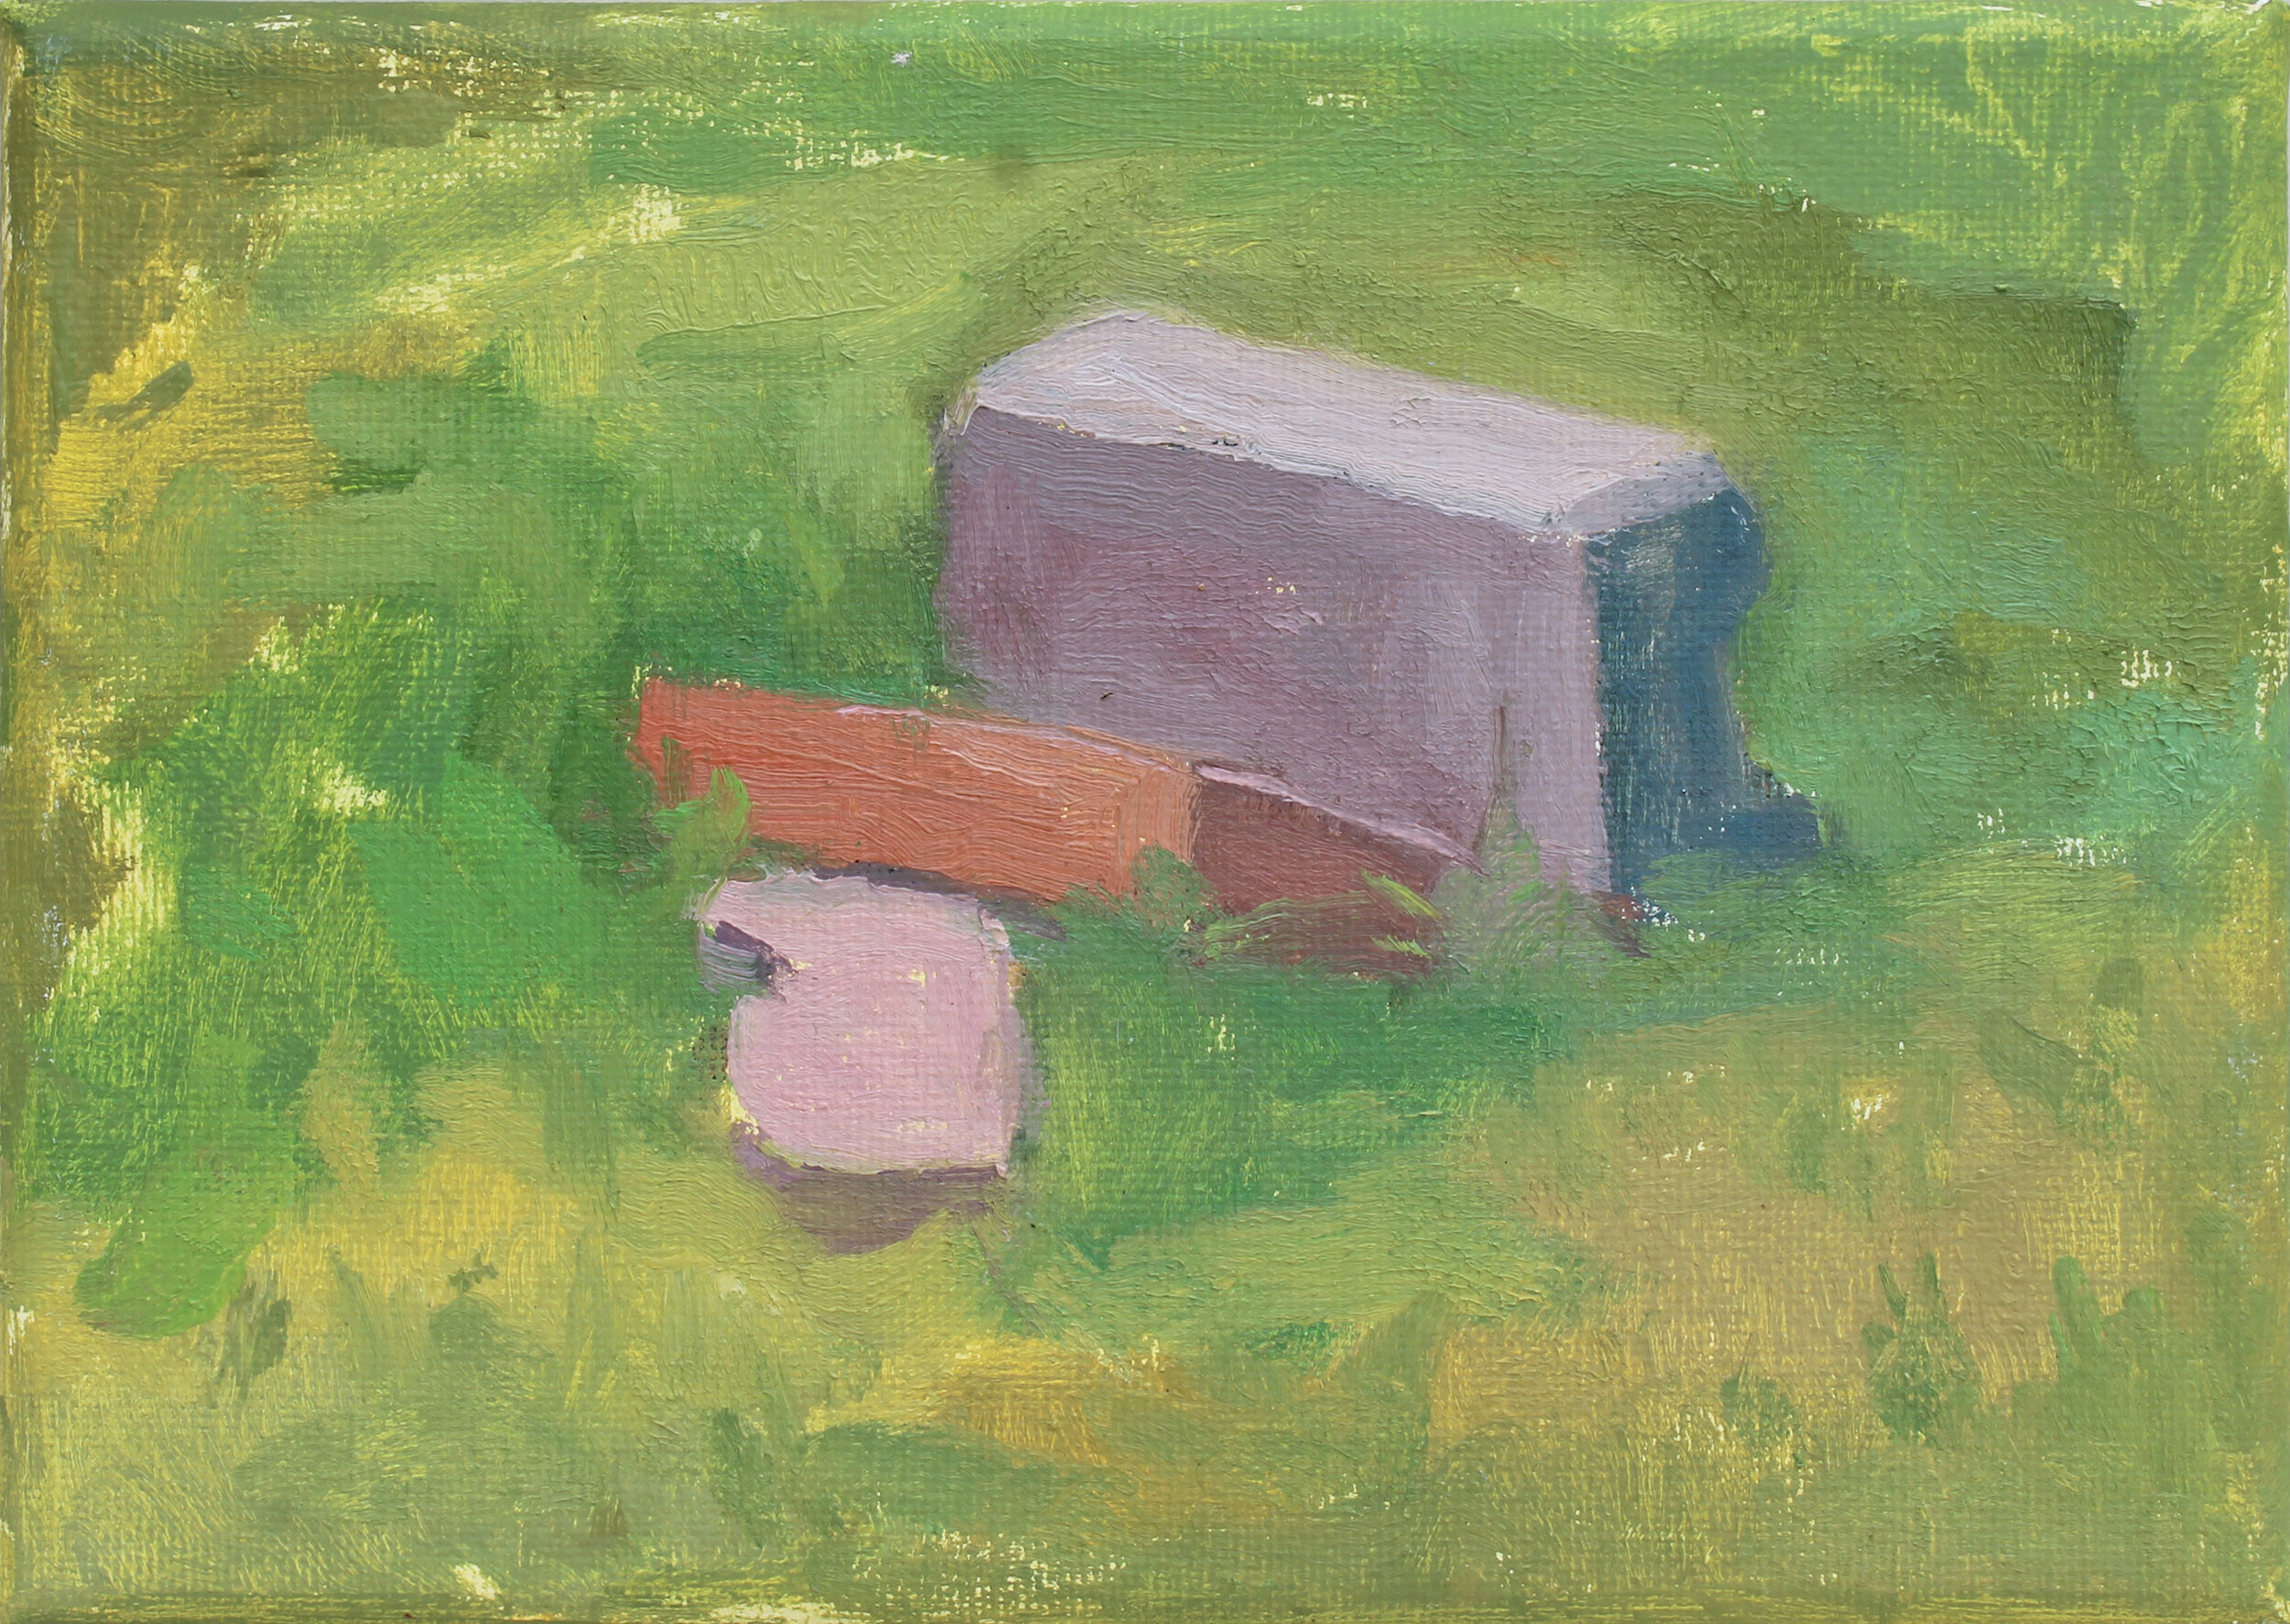    Summer Grass, Three Bricks   oil on canvas 5x7” 2019   available  